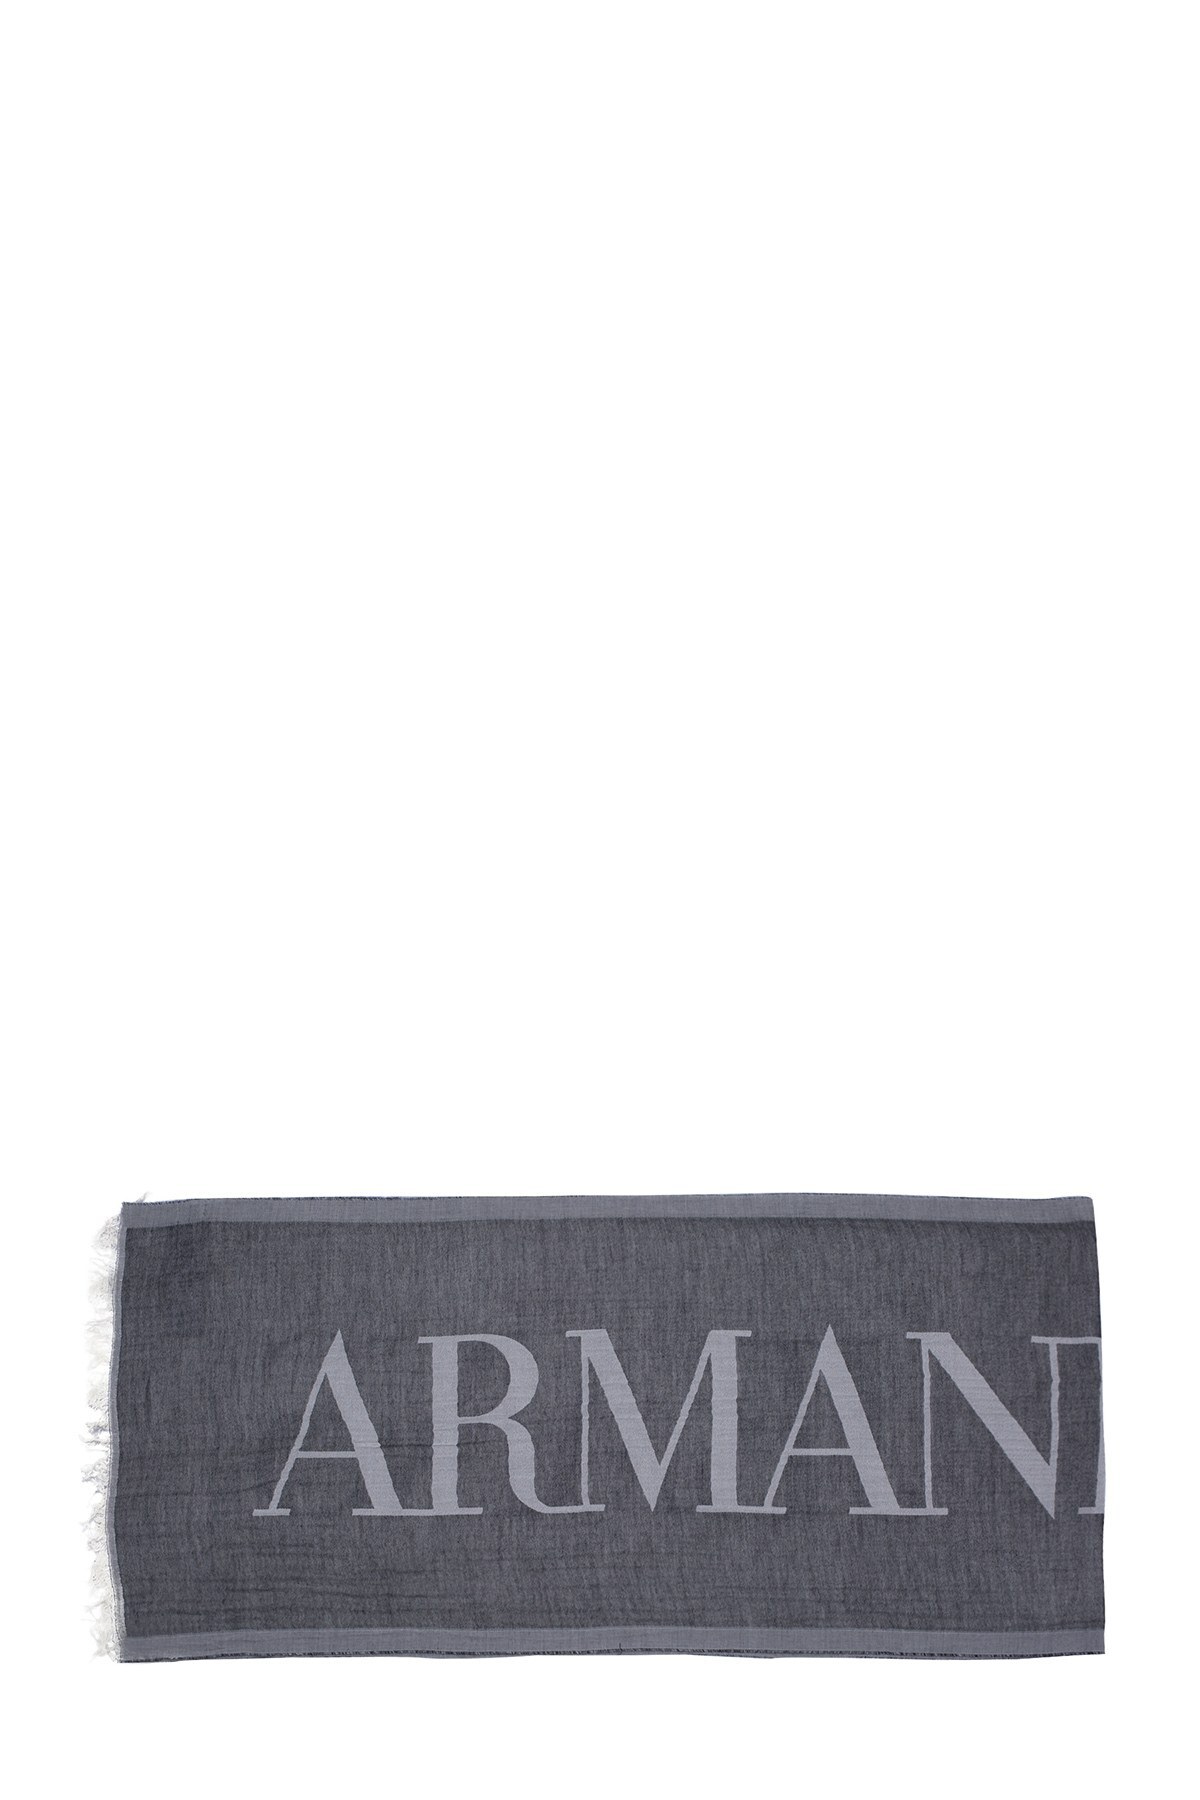 Armani Jeans Erkek Şal 934061 7P715 00020 GRİ